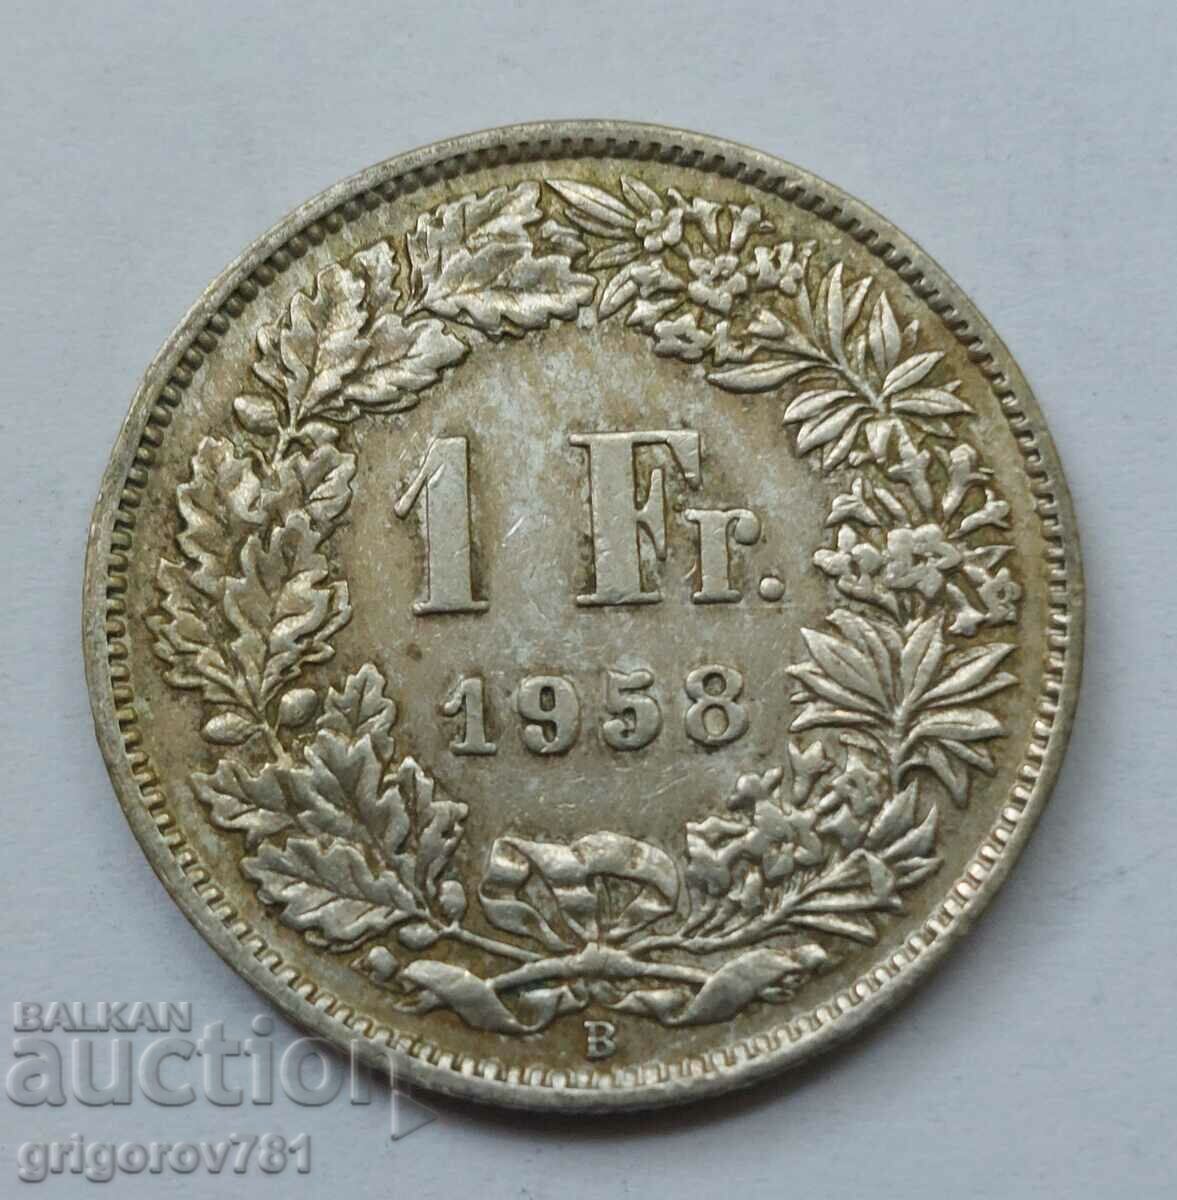 1 Franc Silver Switzerland 1958 B - Silver Coin #29